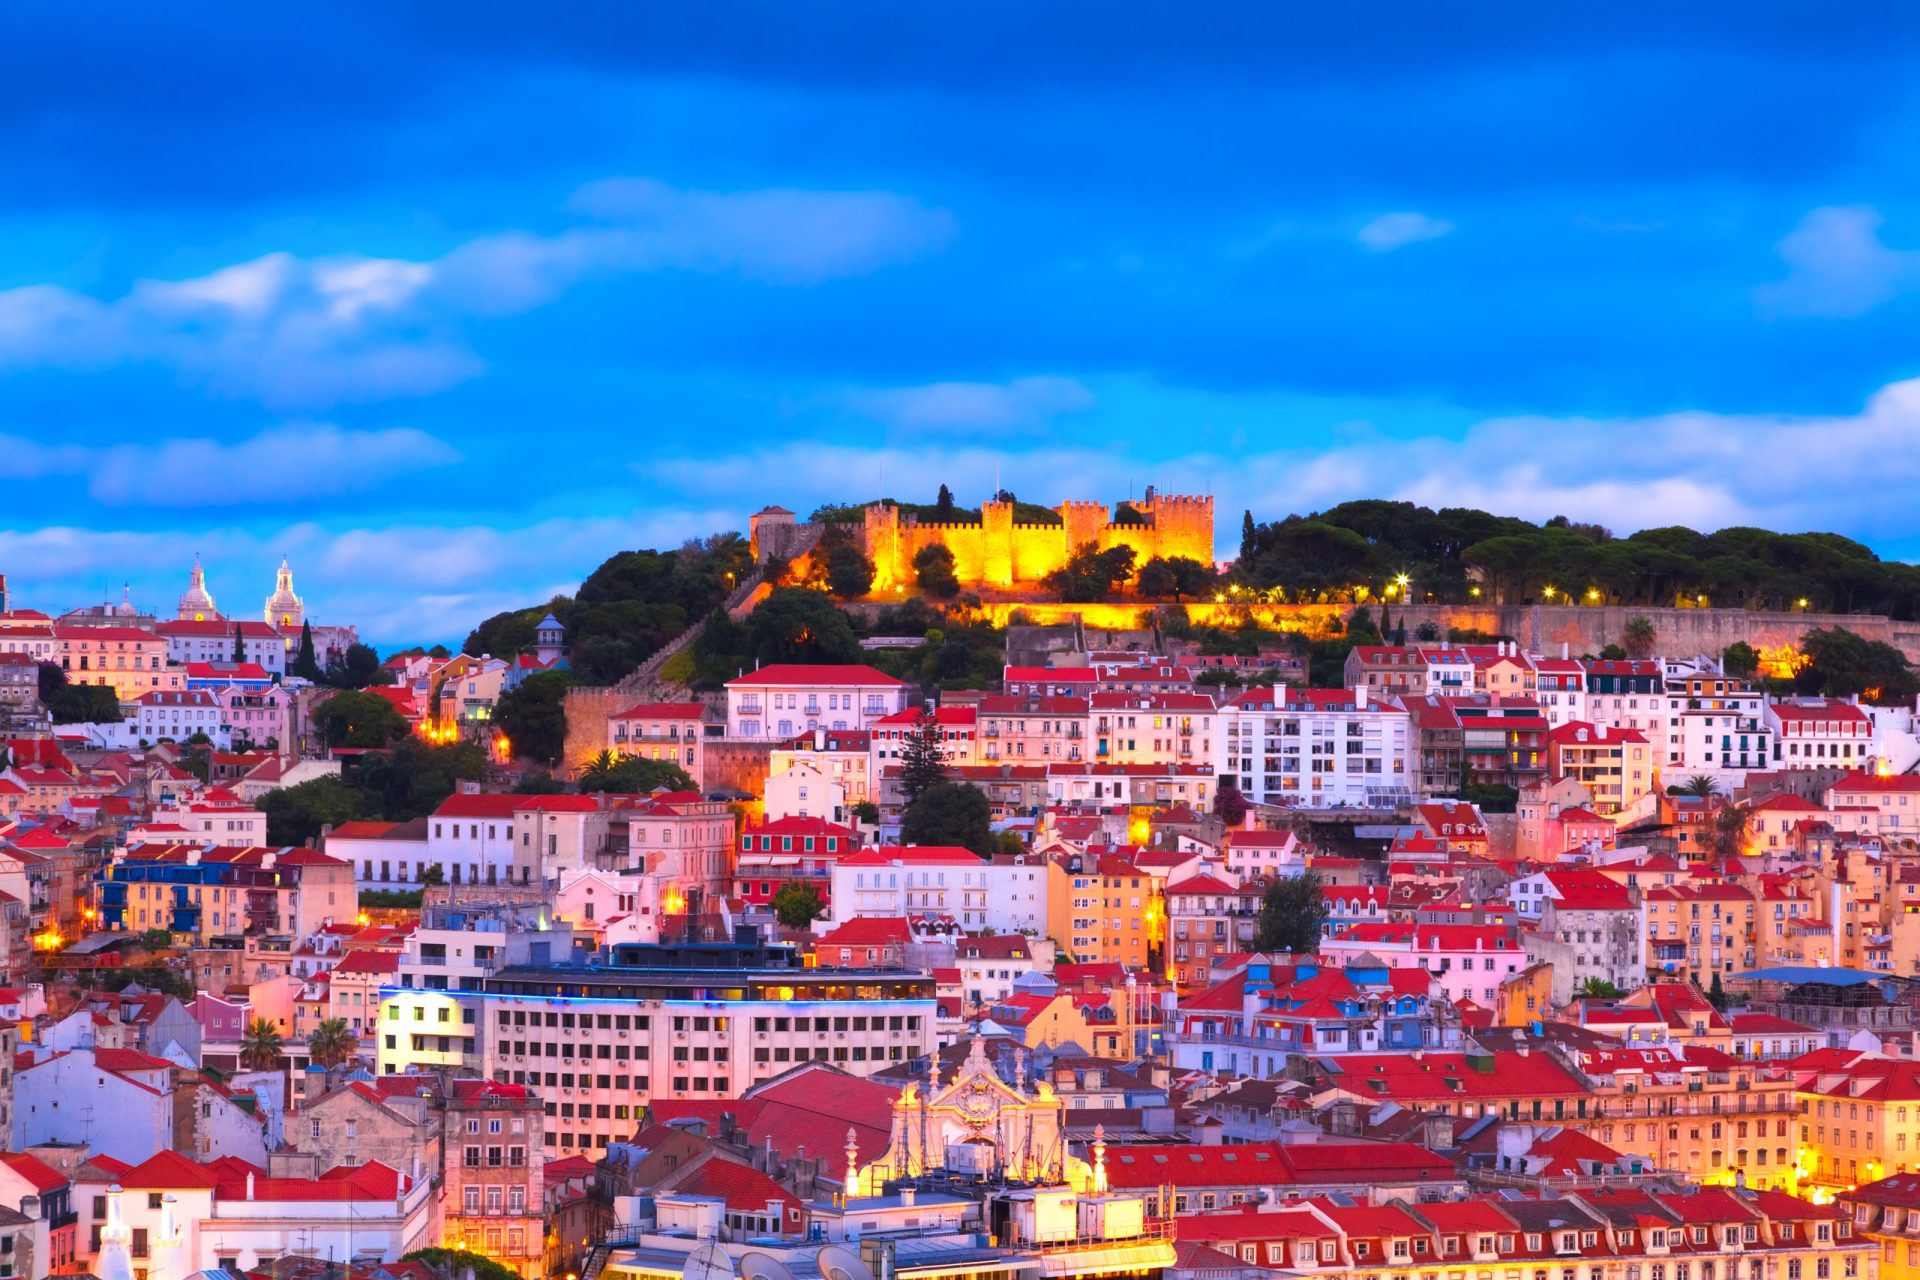 Prémio da Semana Europeia da Mobilidade 2016. Lisboa é finalista